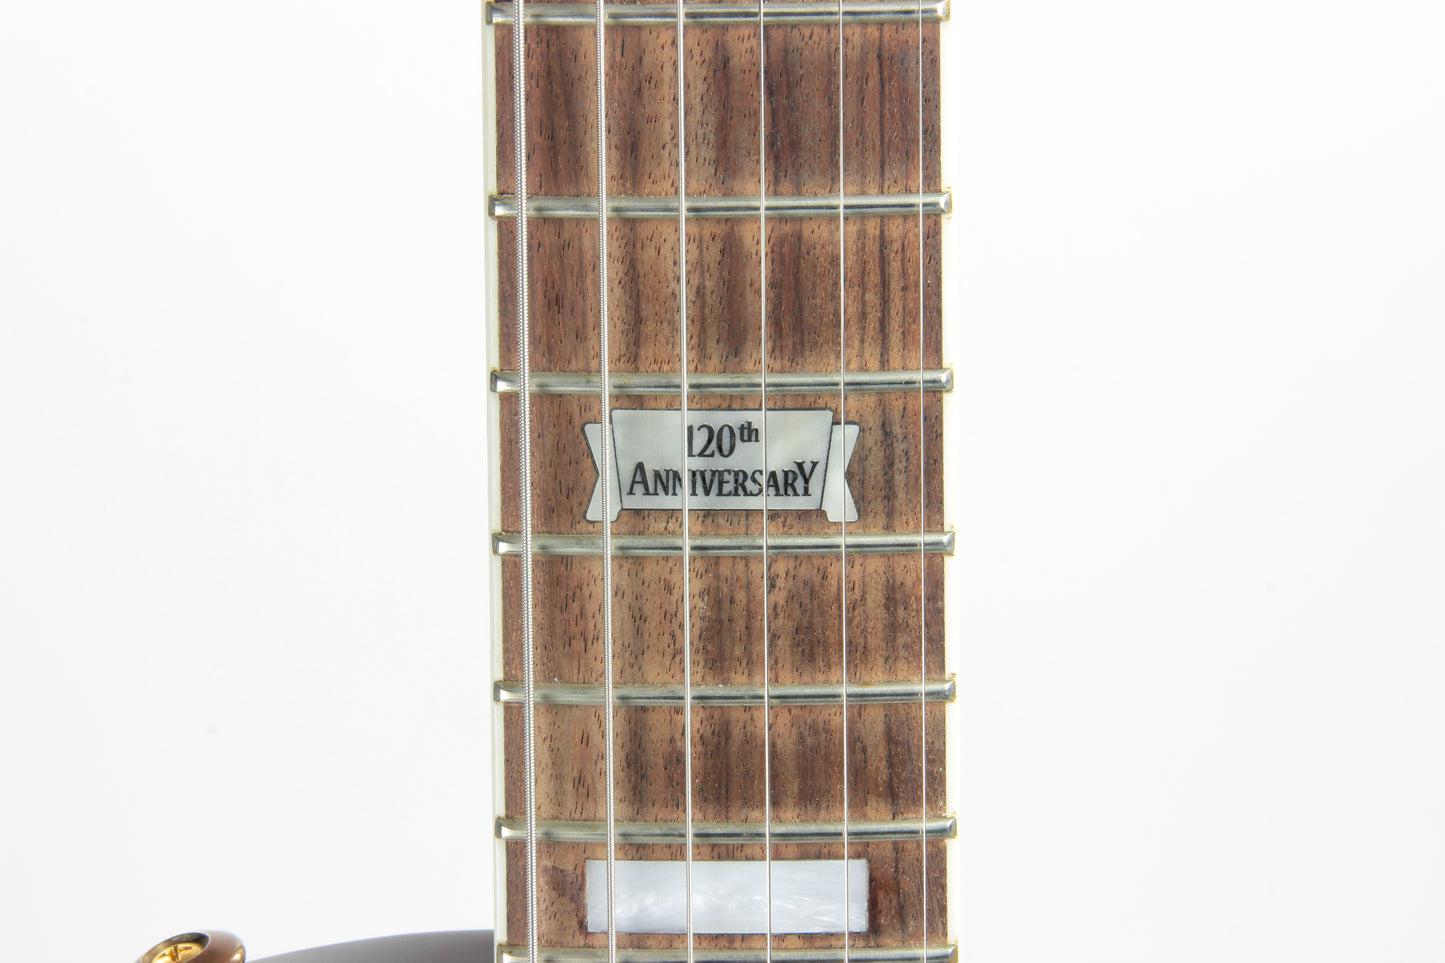 2014 Gibson Les Paul Custom Classic Lite Vintage Sunburst - 120th Anniversary - Light Figured/Flametop